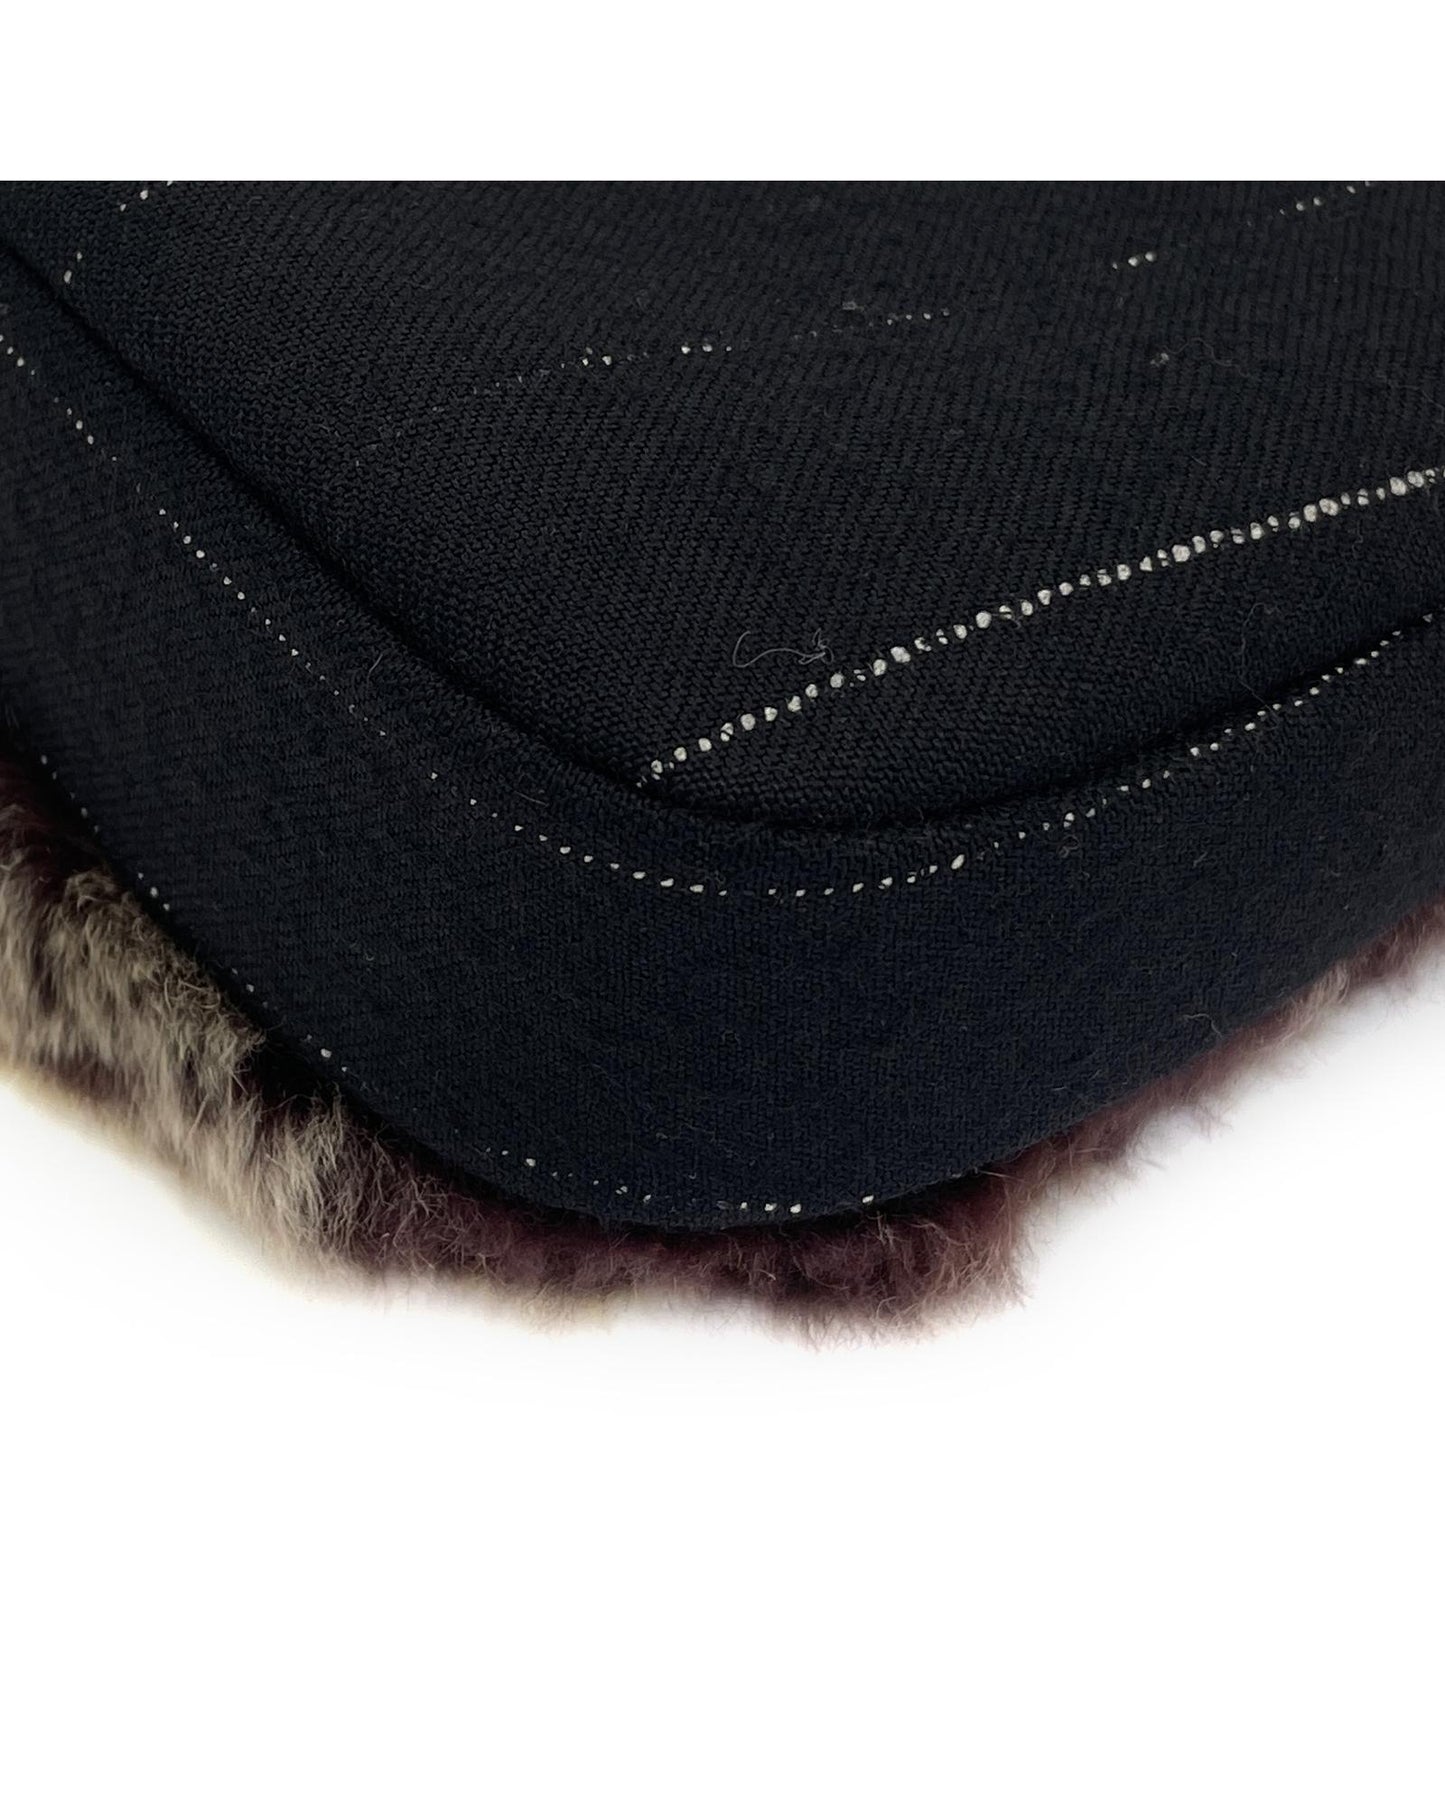 Dior Women's Fur Shoulder Bag in Brown - Excellent Condition in Brown